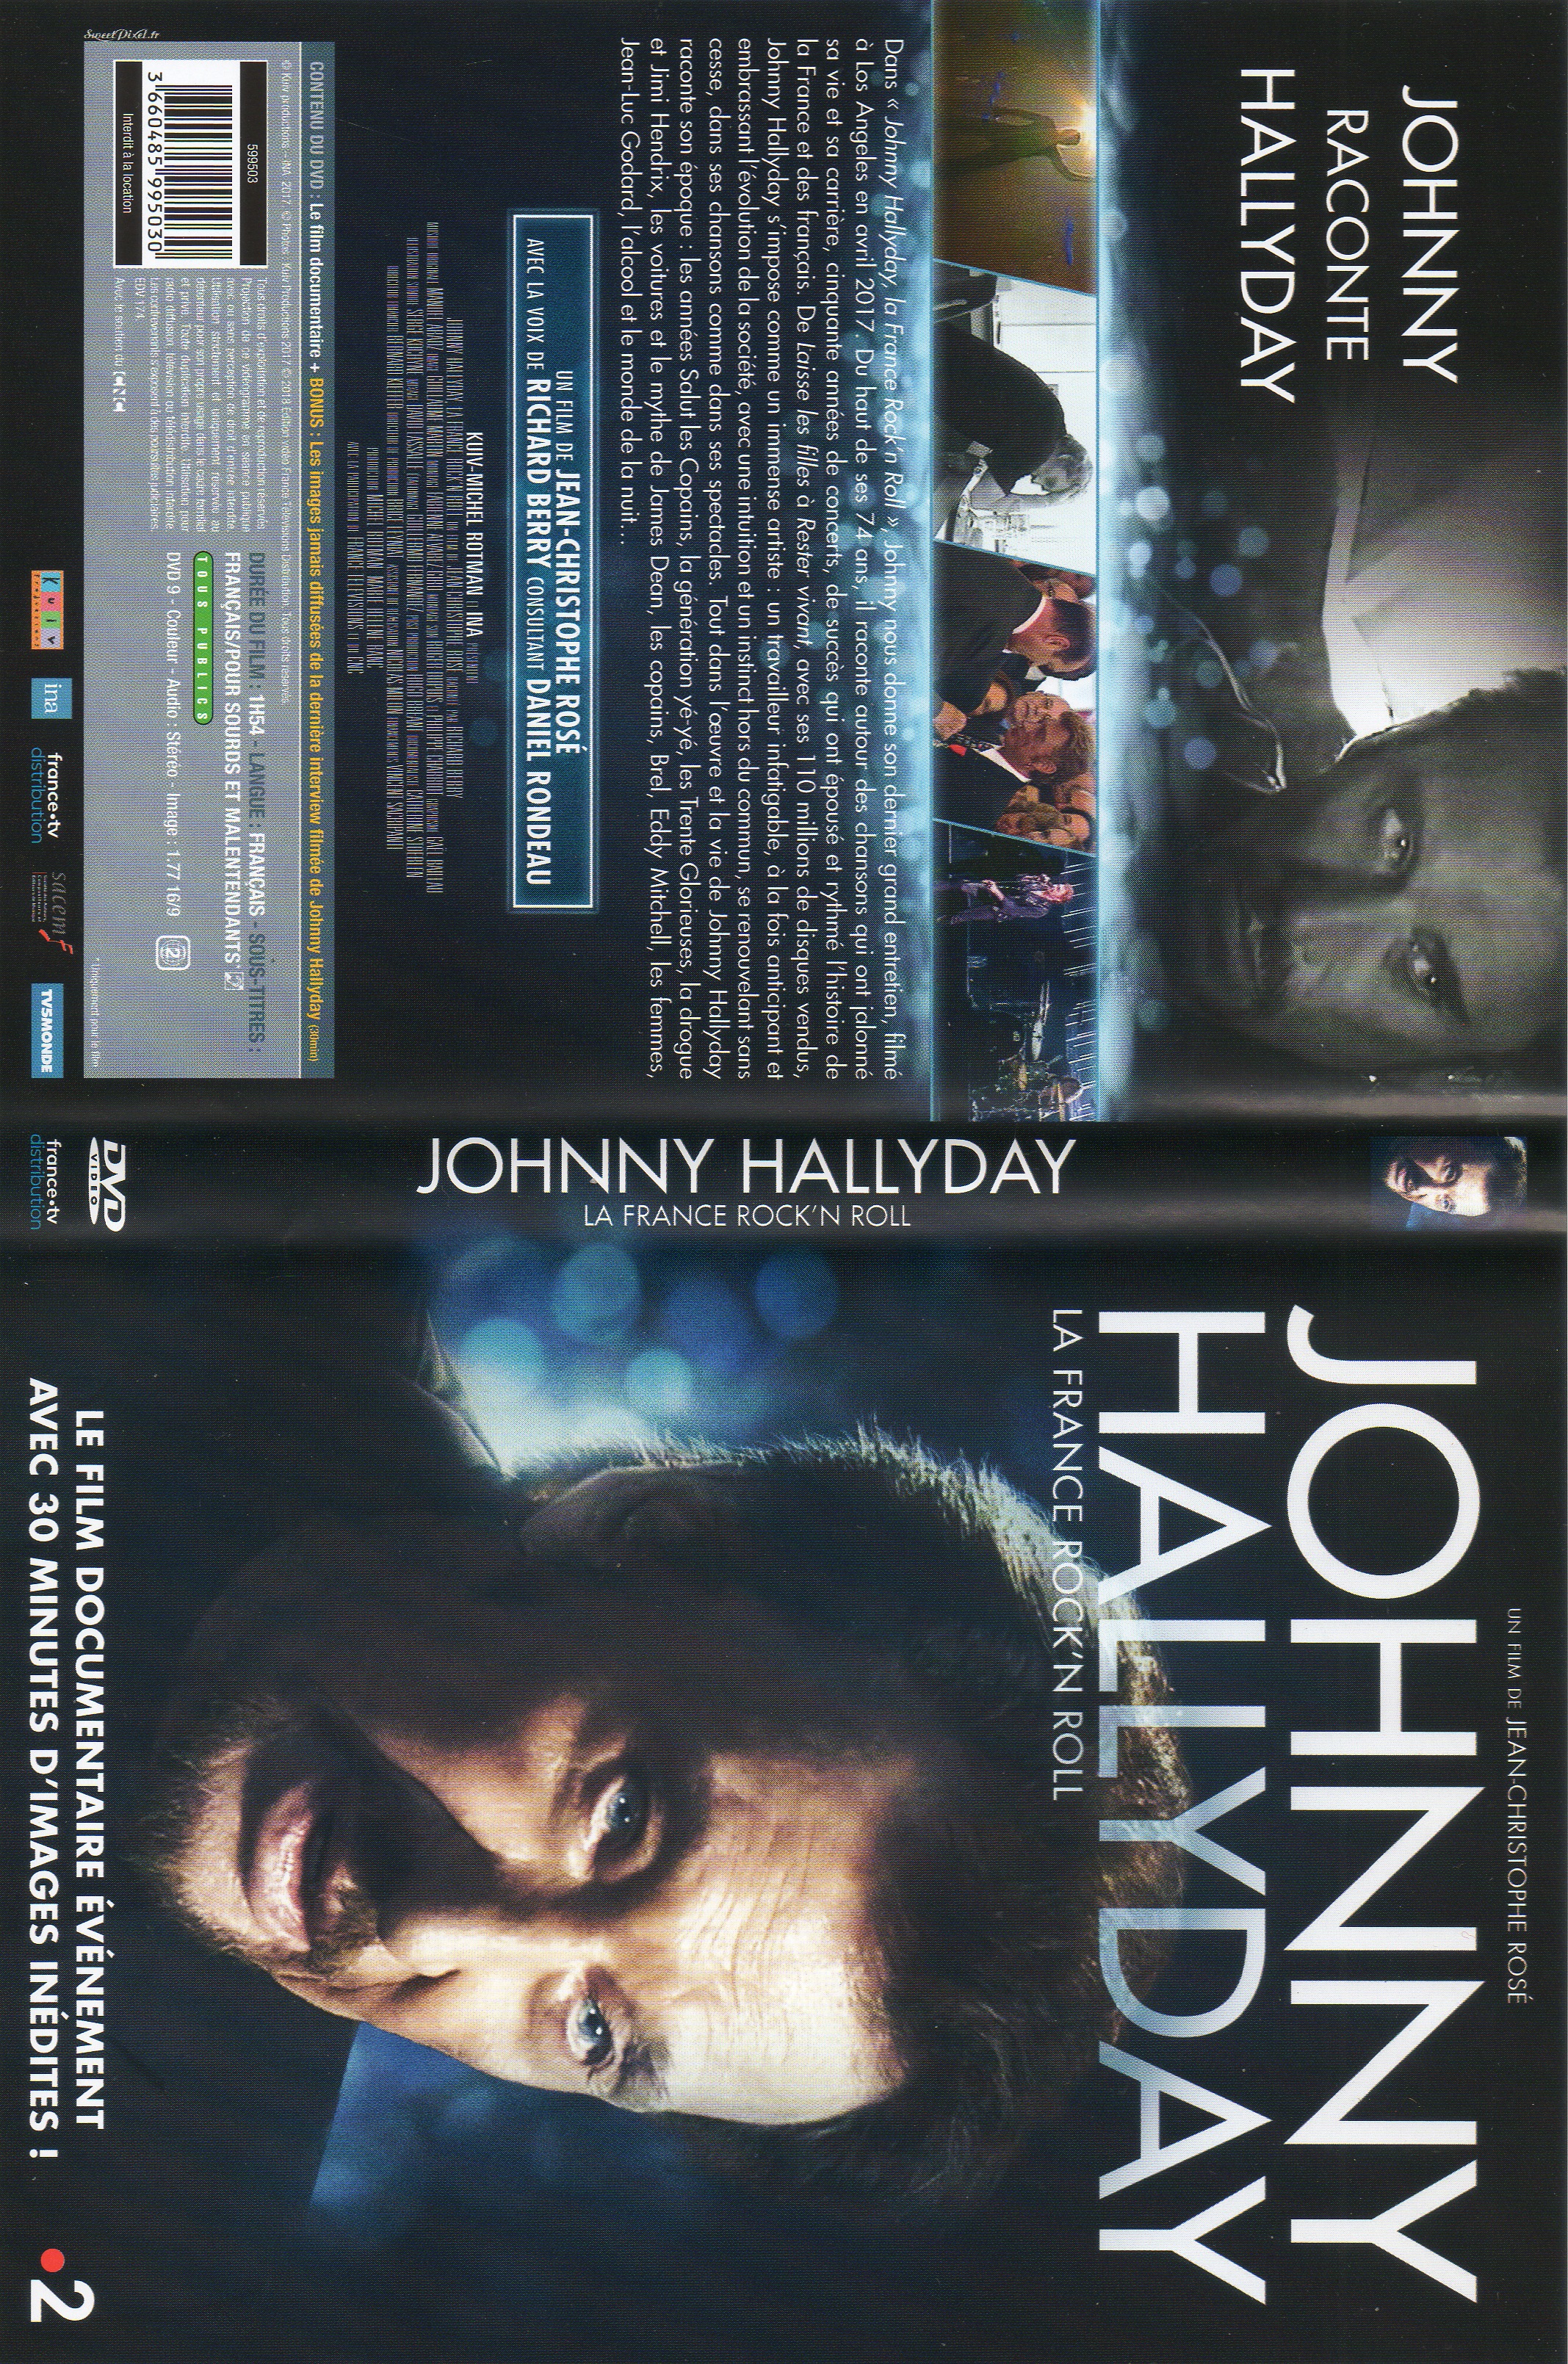 Jaquette DVD Johnny Hallyday La France Rock